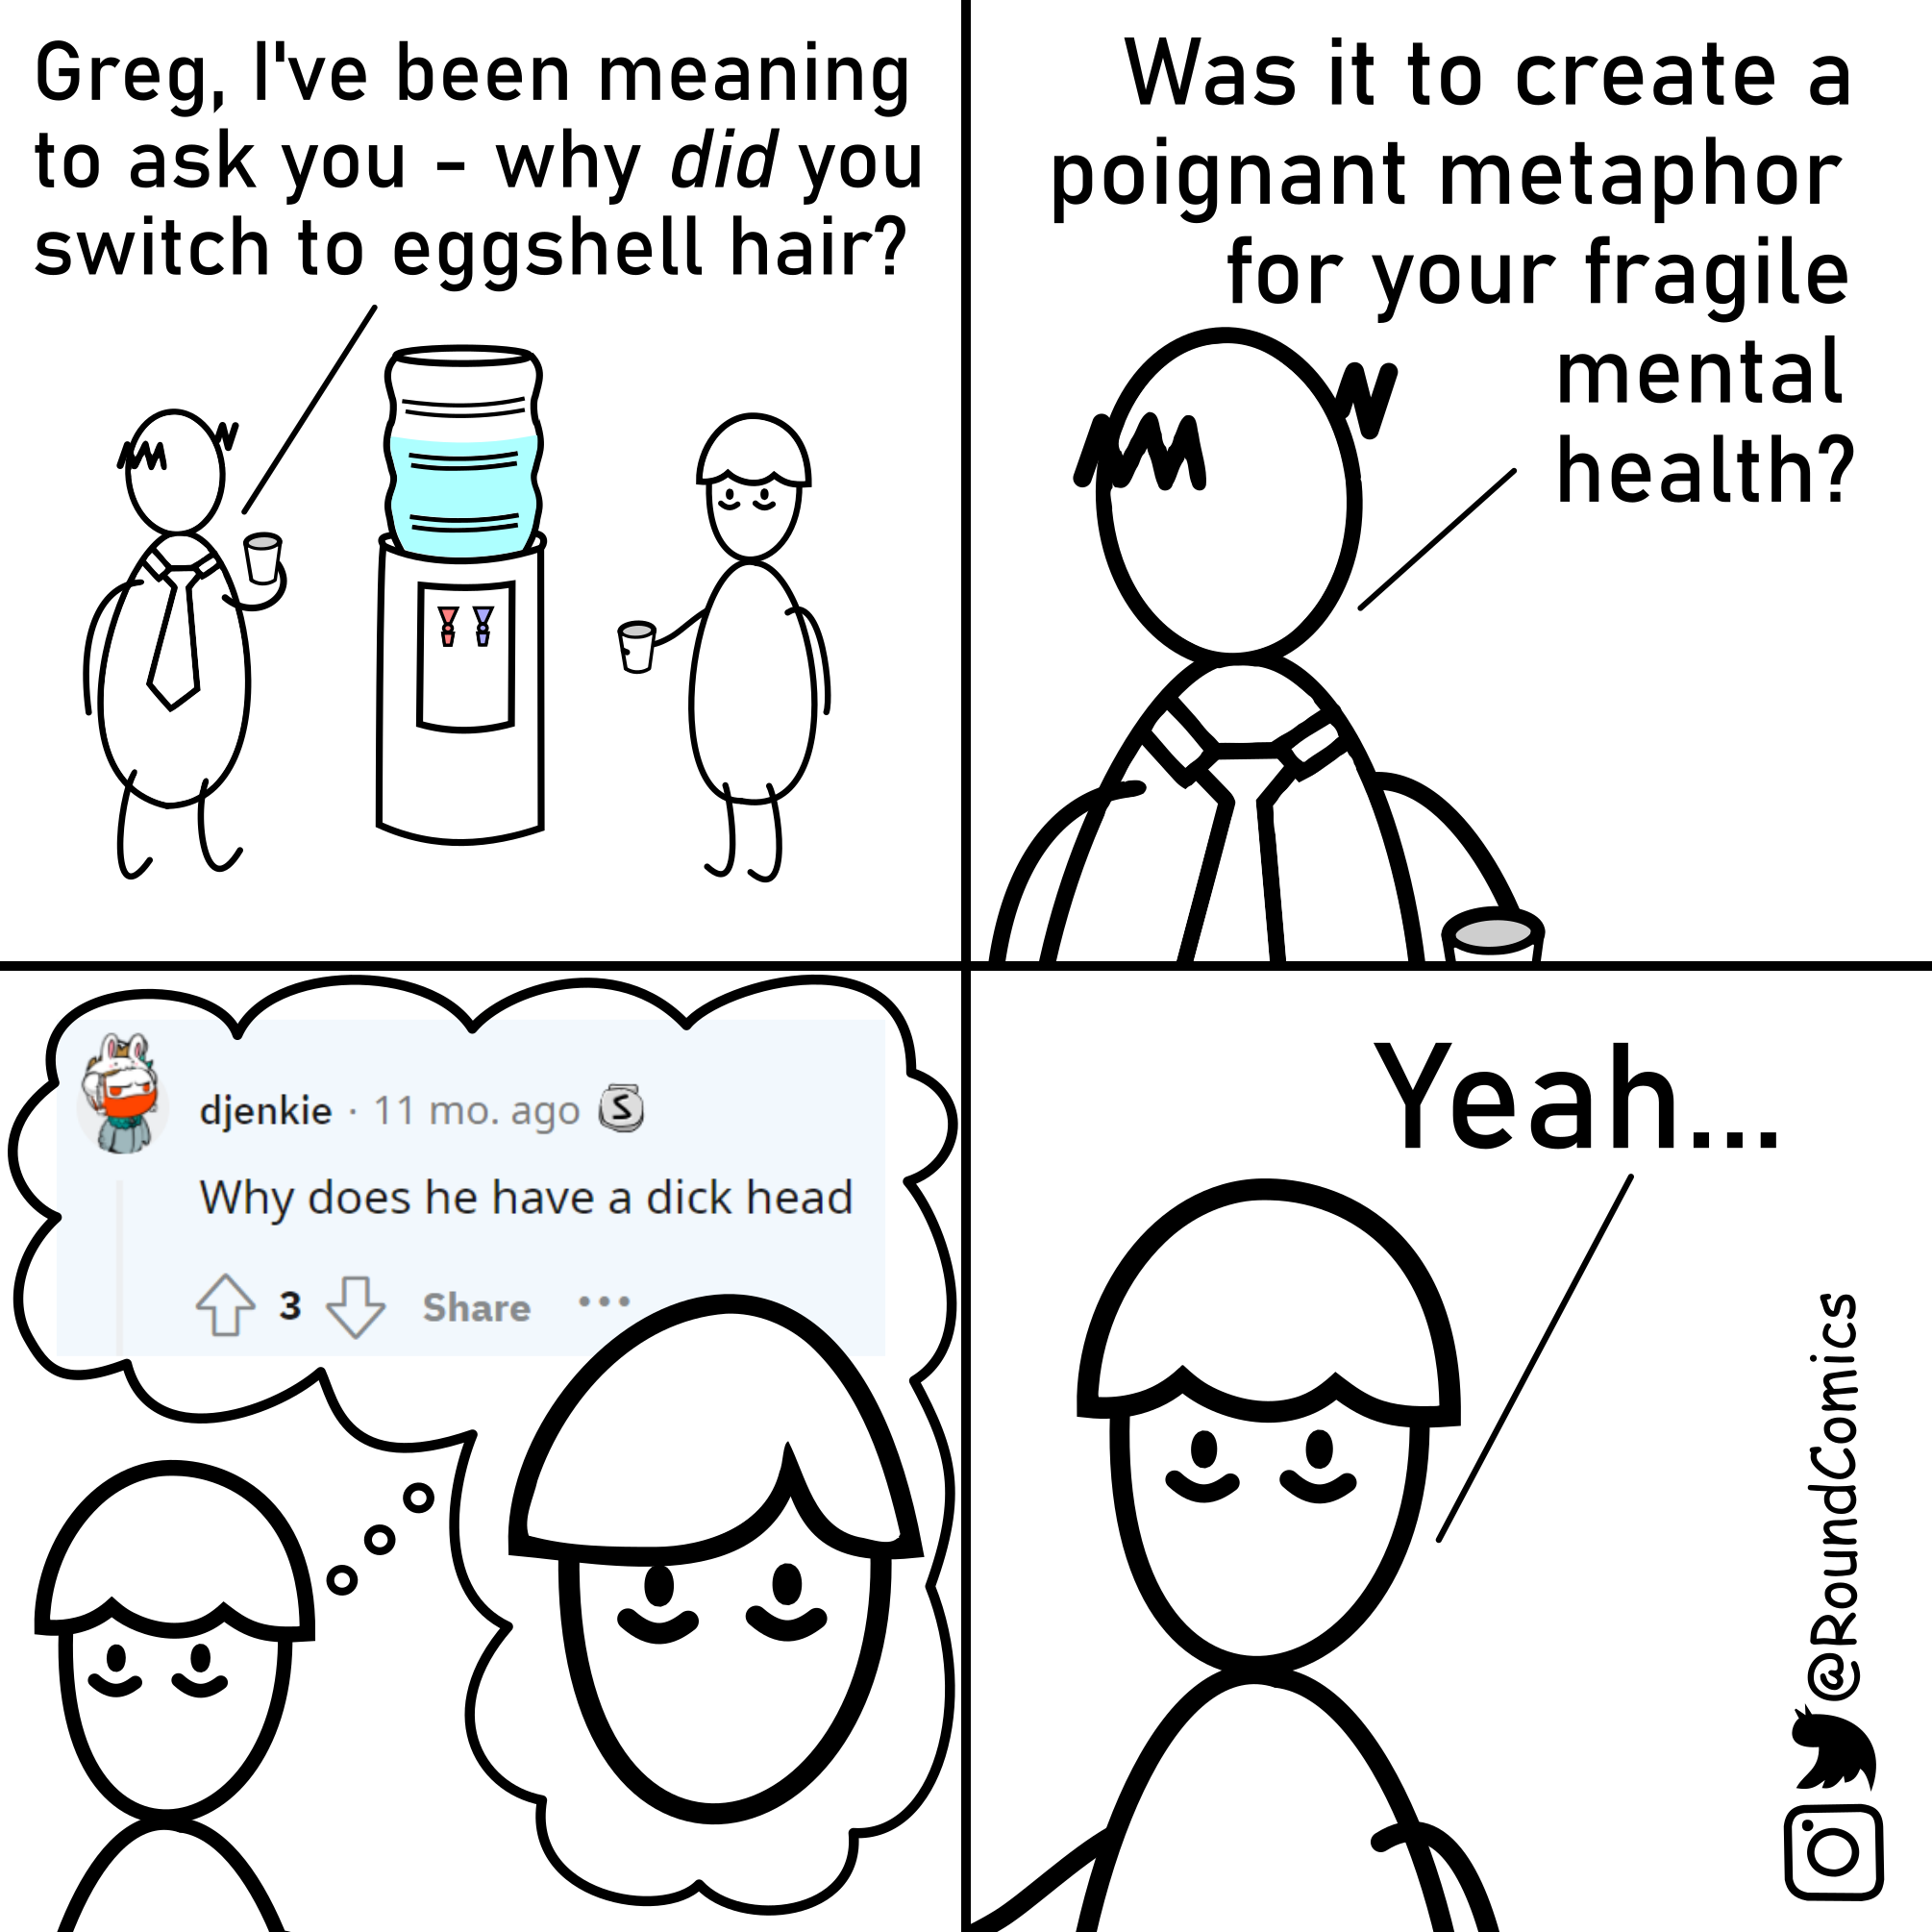 Greg's origin story